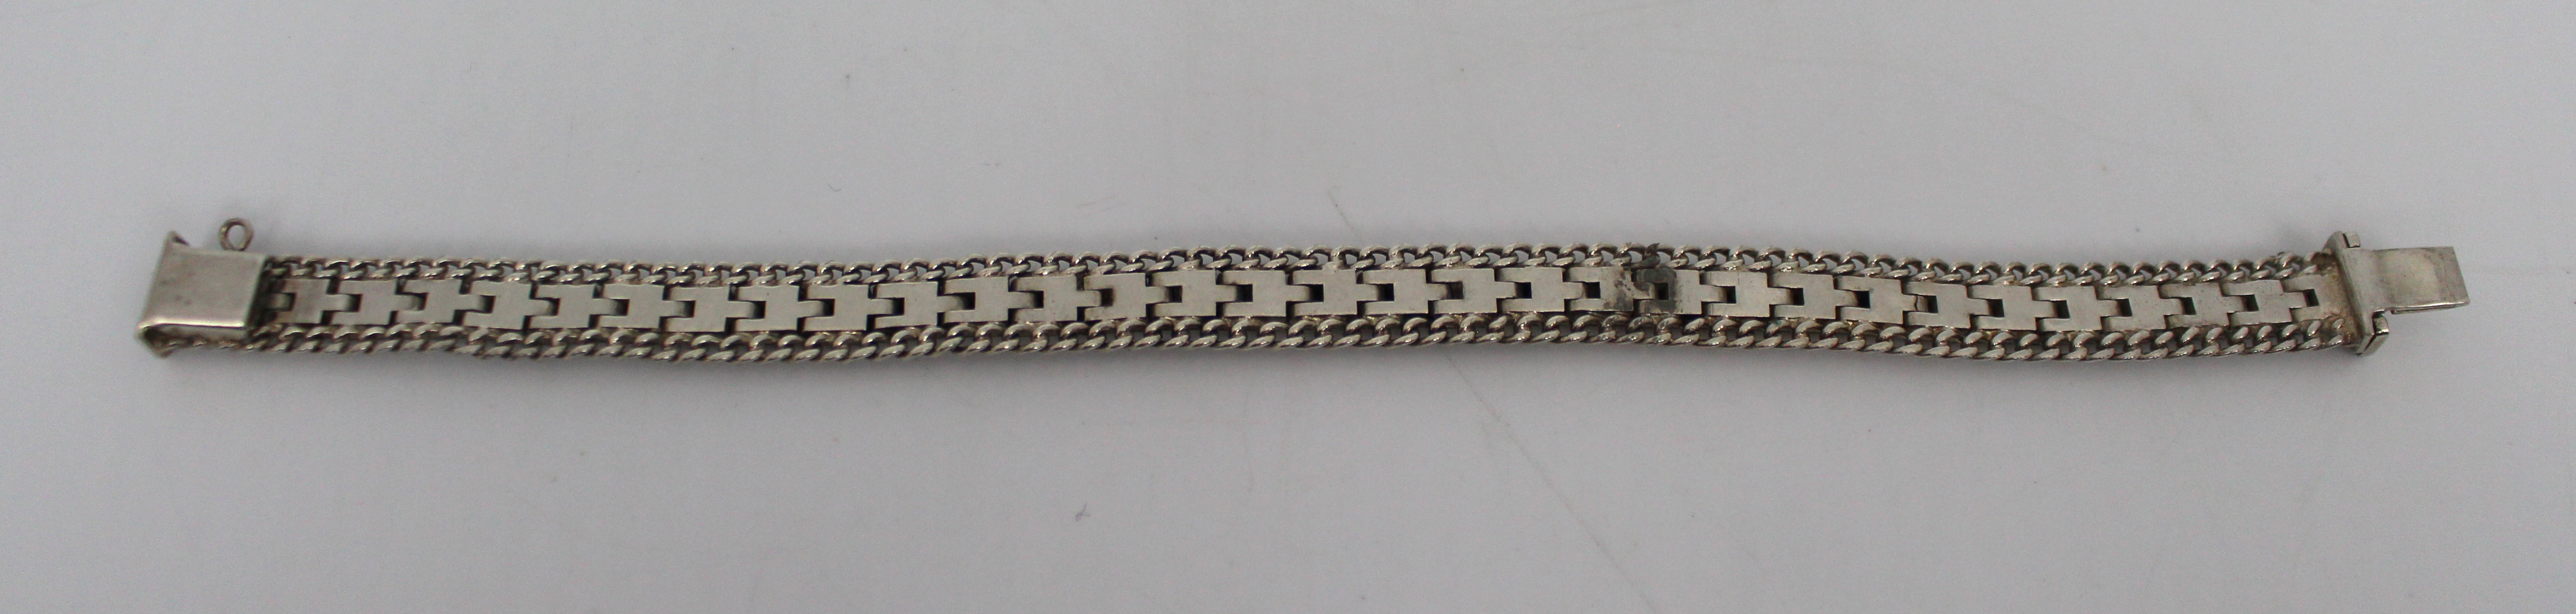 Silver 7 1/2 inch Bracelet - Image 2 of 2